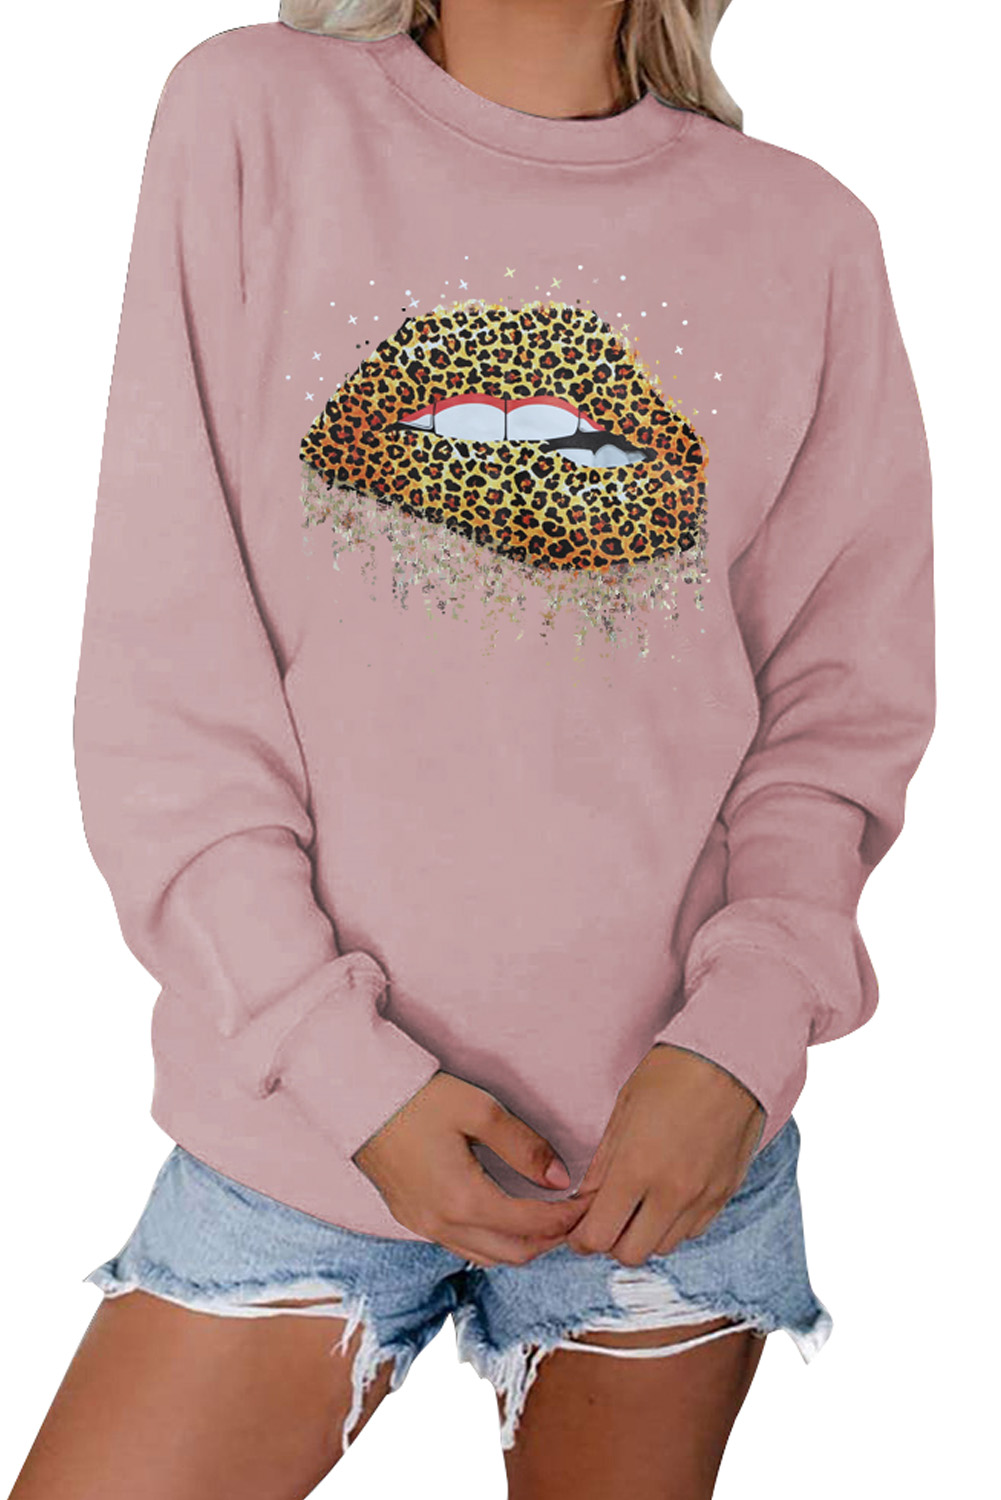 Stockpapa Apparel LADIES Crew Neck Leopard Lips Graphic Sweatshirt